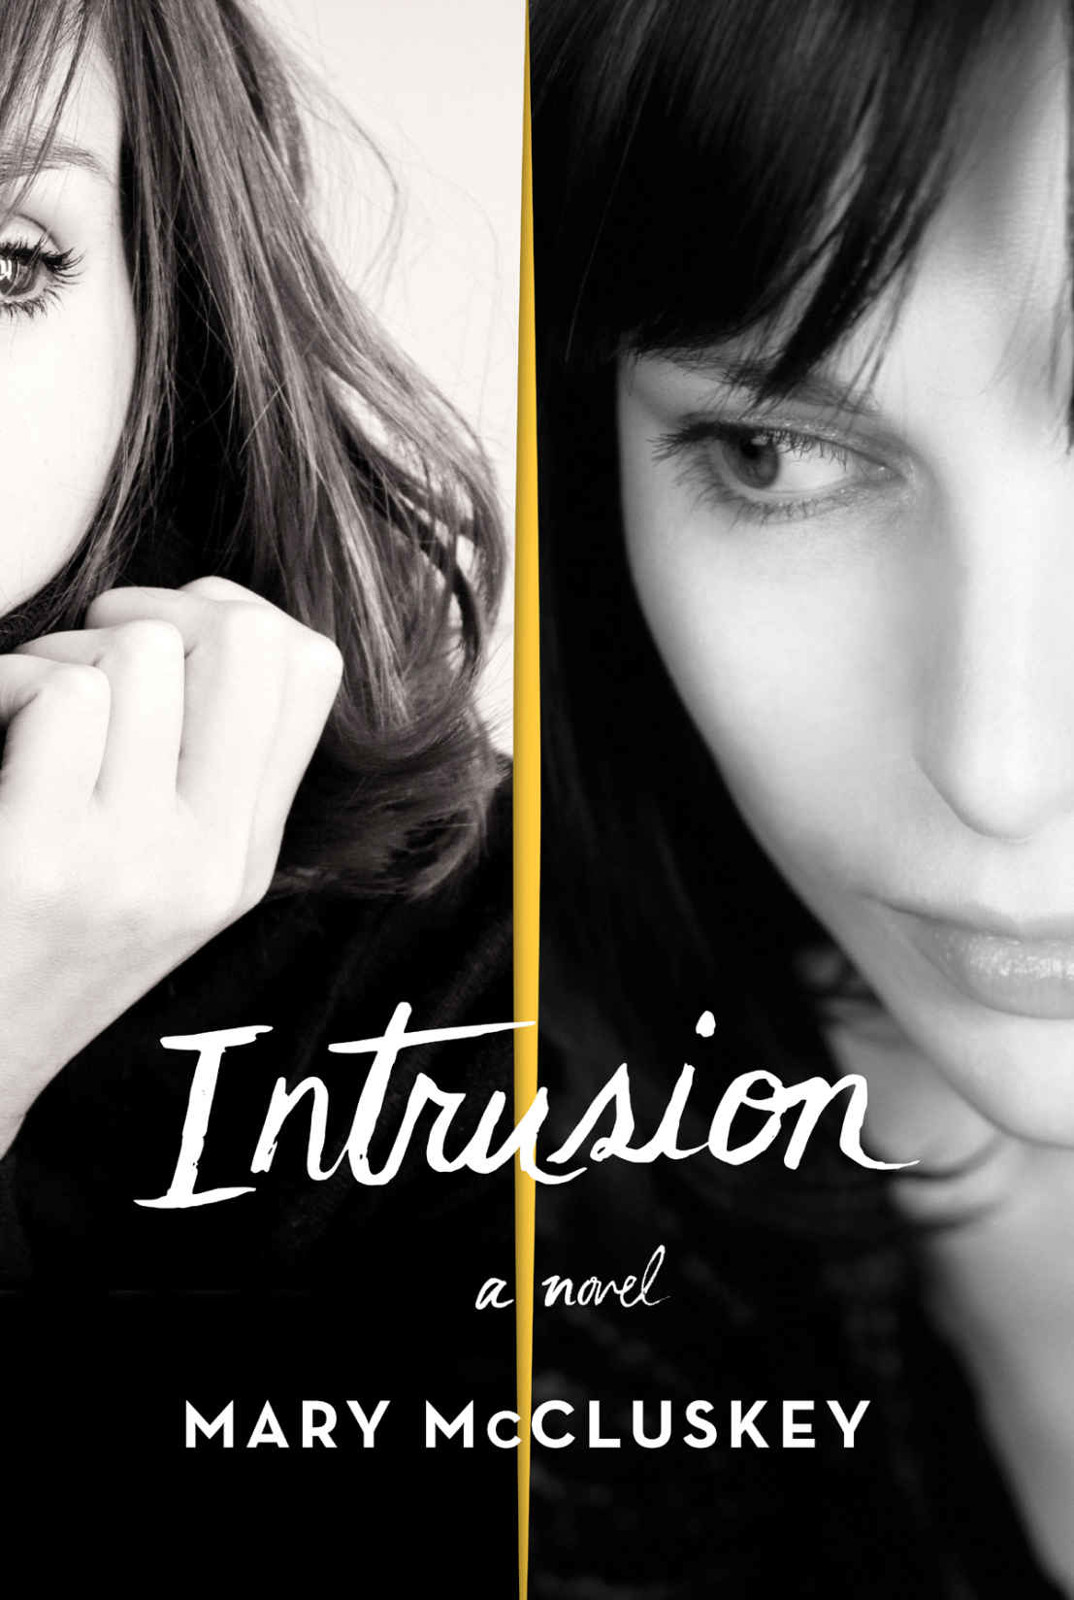 Intrusion: A Novel by Mary McCluskey